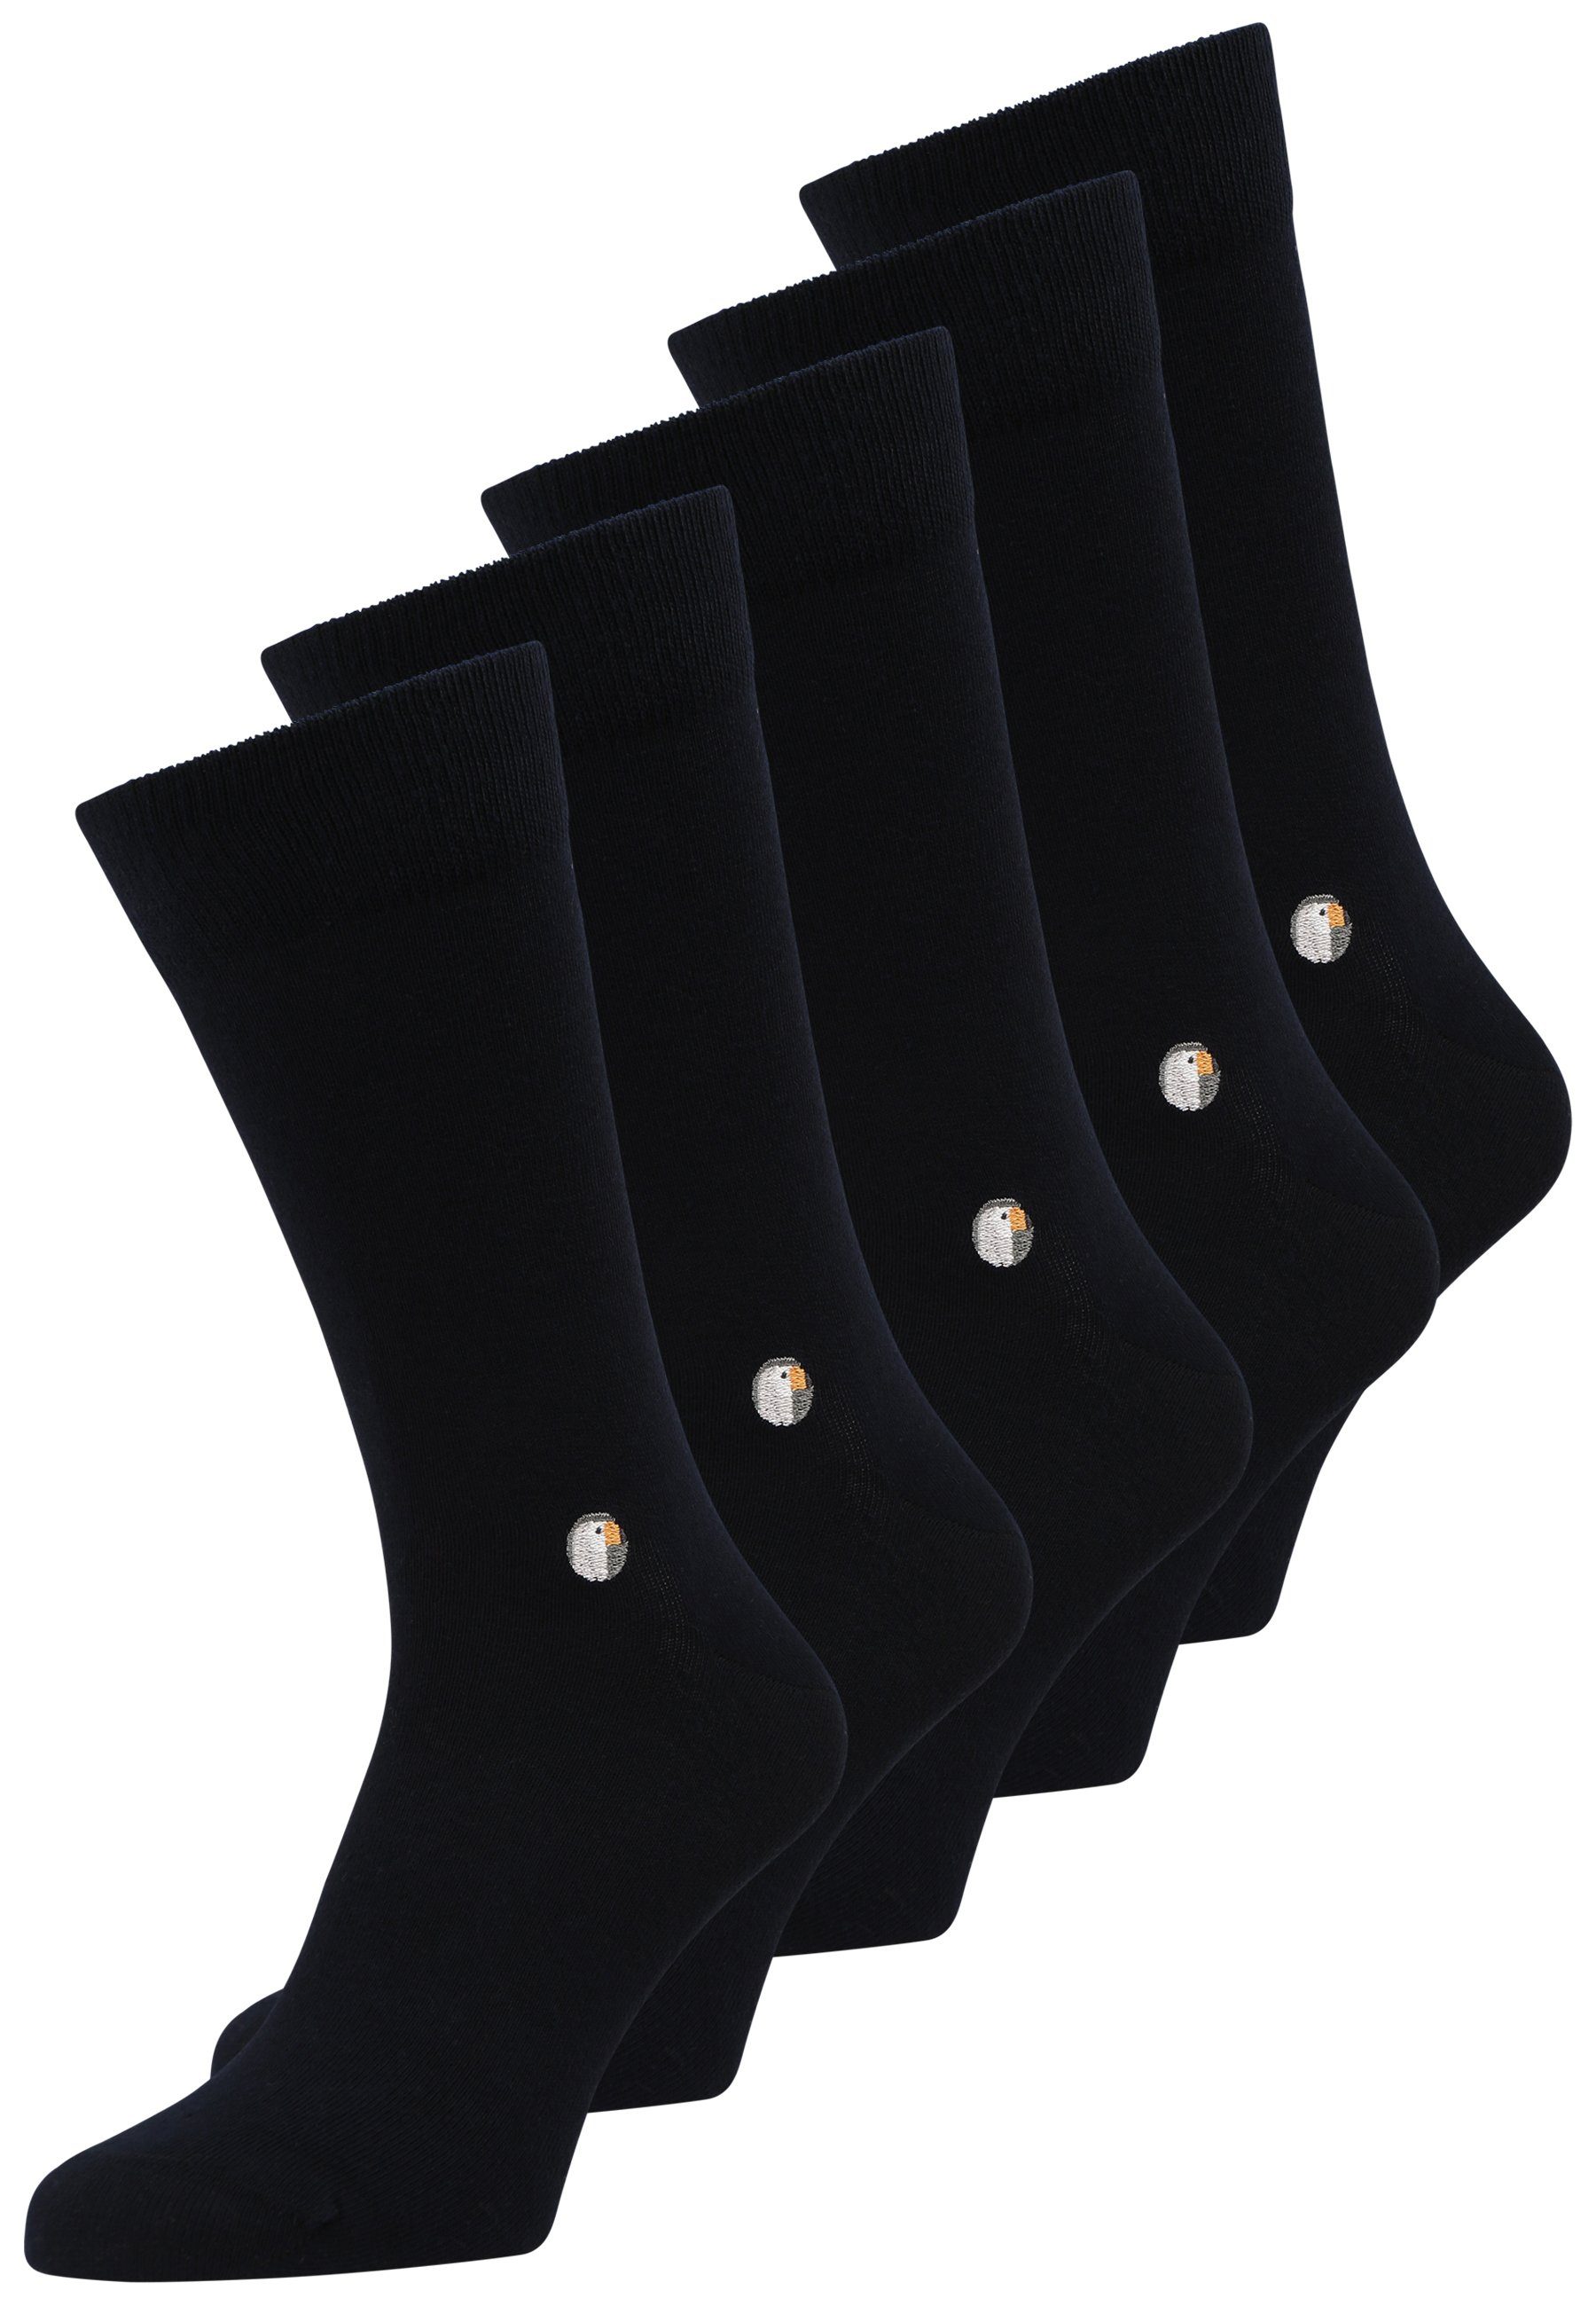 Sokid Socken Set 2 5er Pack (5-Paar) GOTS zertifizierte Bio-Baumwolle